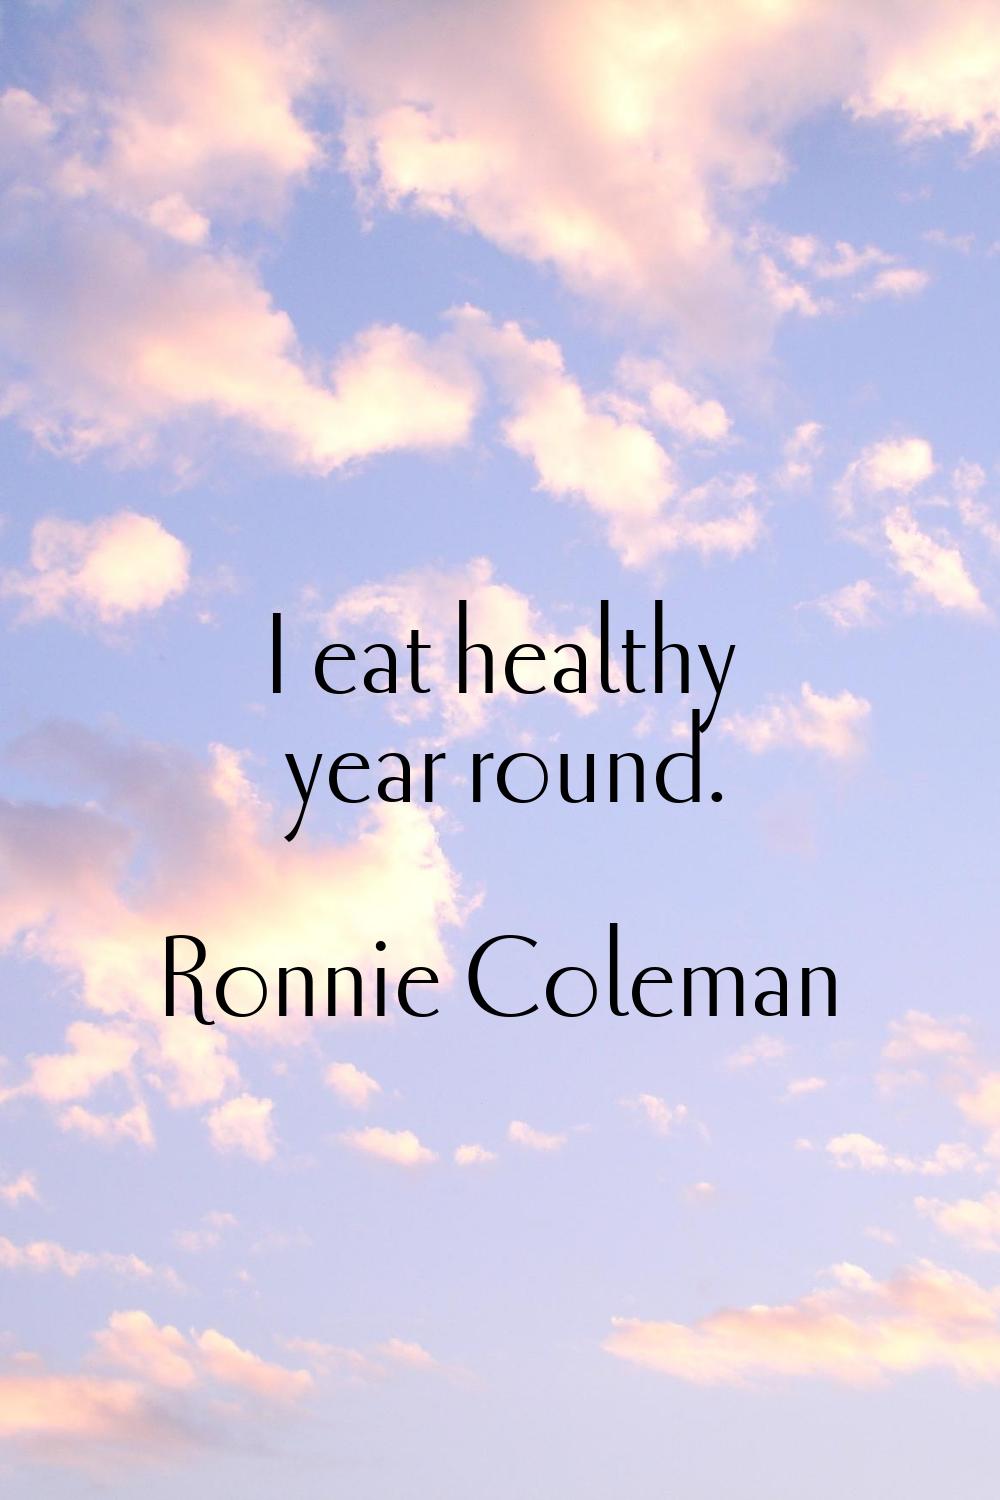 I eat healthy year round.